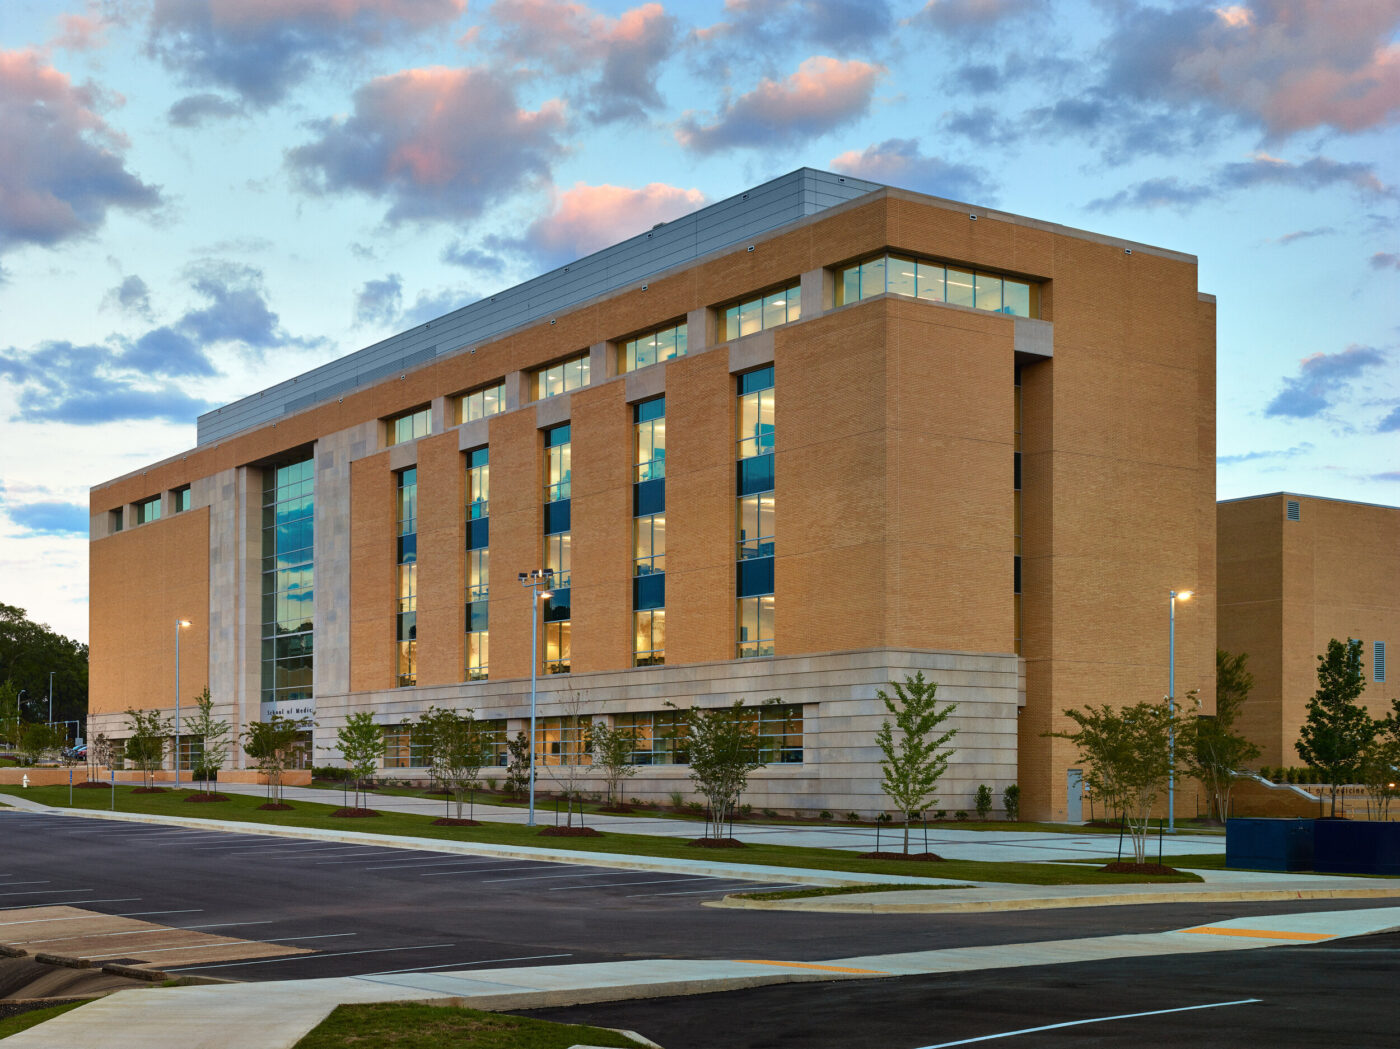 Easiest Medical School - University of Mississippi Medical Center School of Medicine